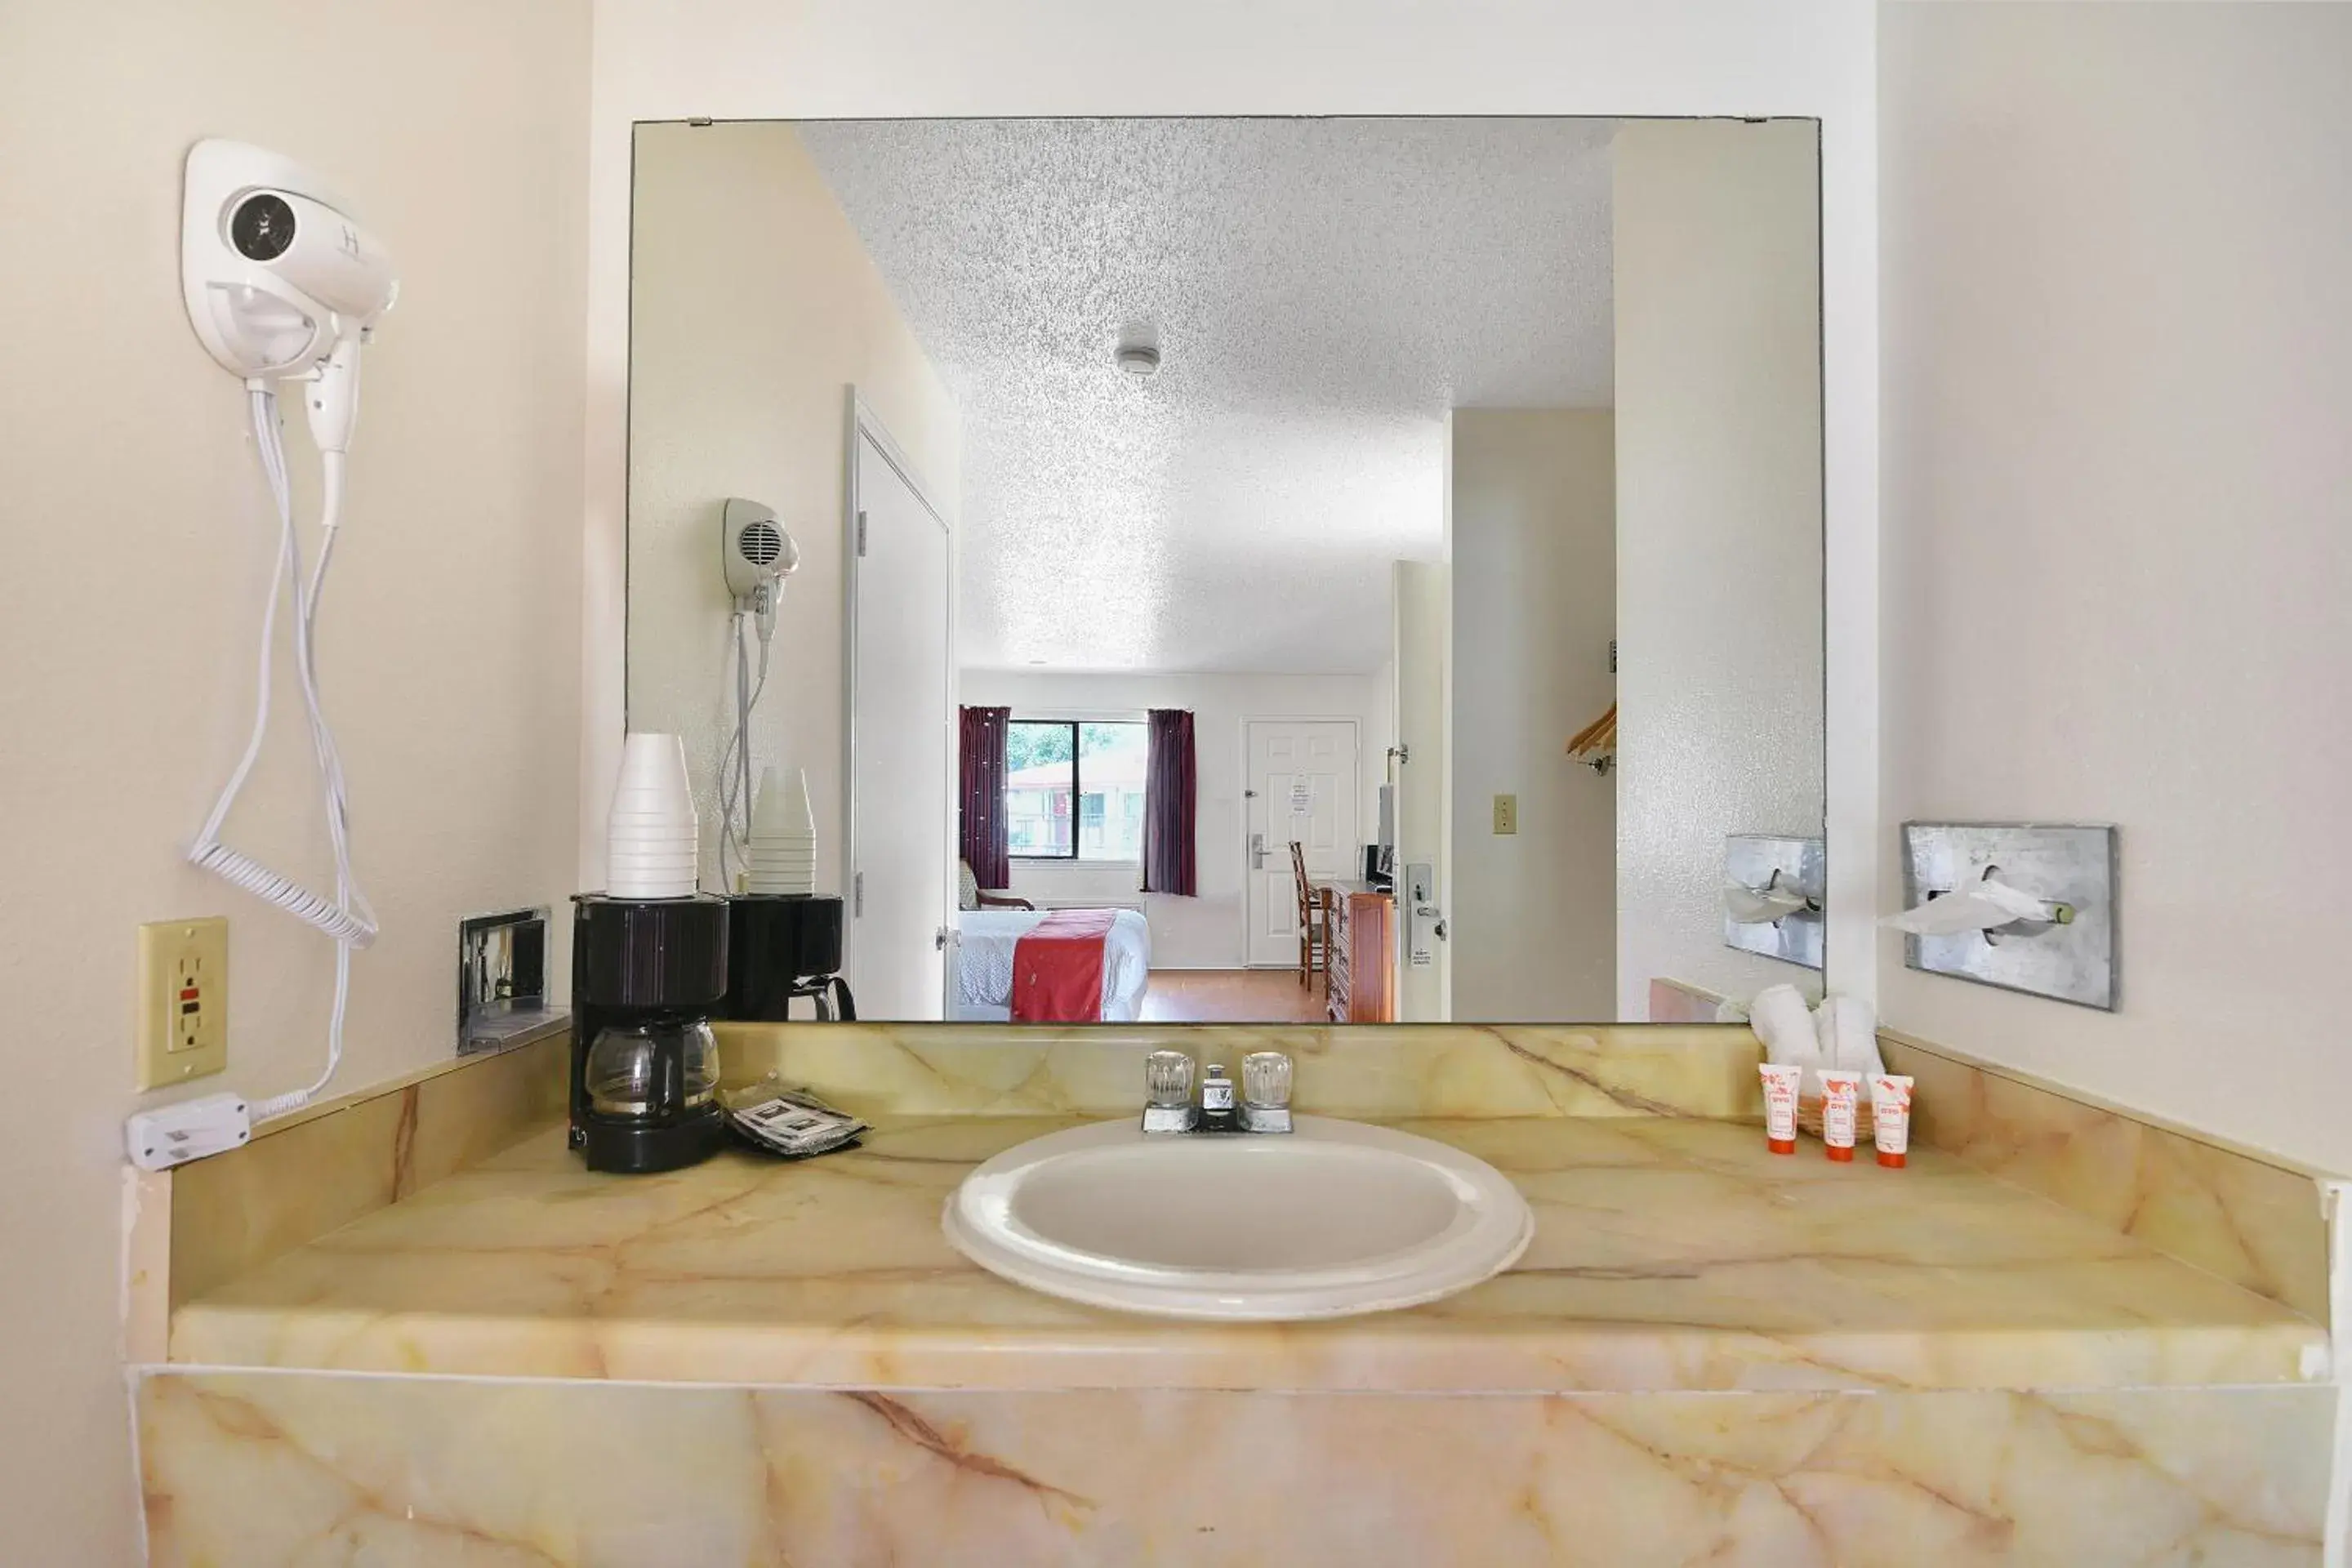 Area and facilities, Bathroom in Americas Best Value Inn Lockhart TX